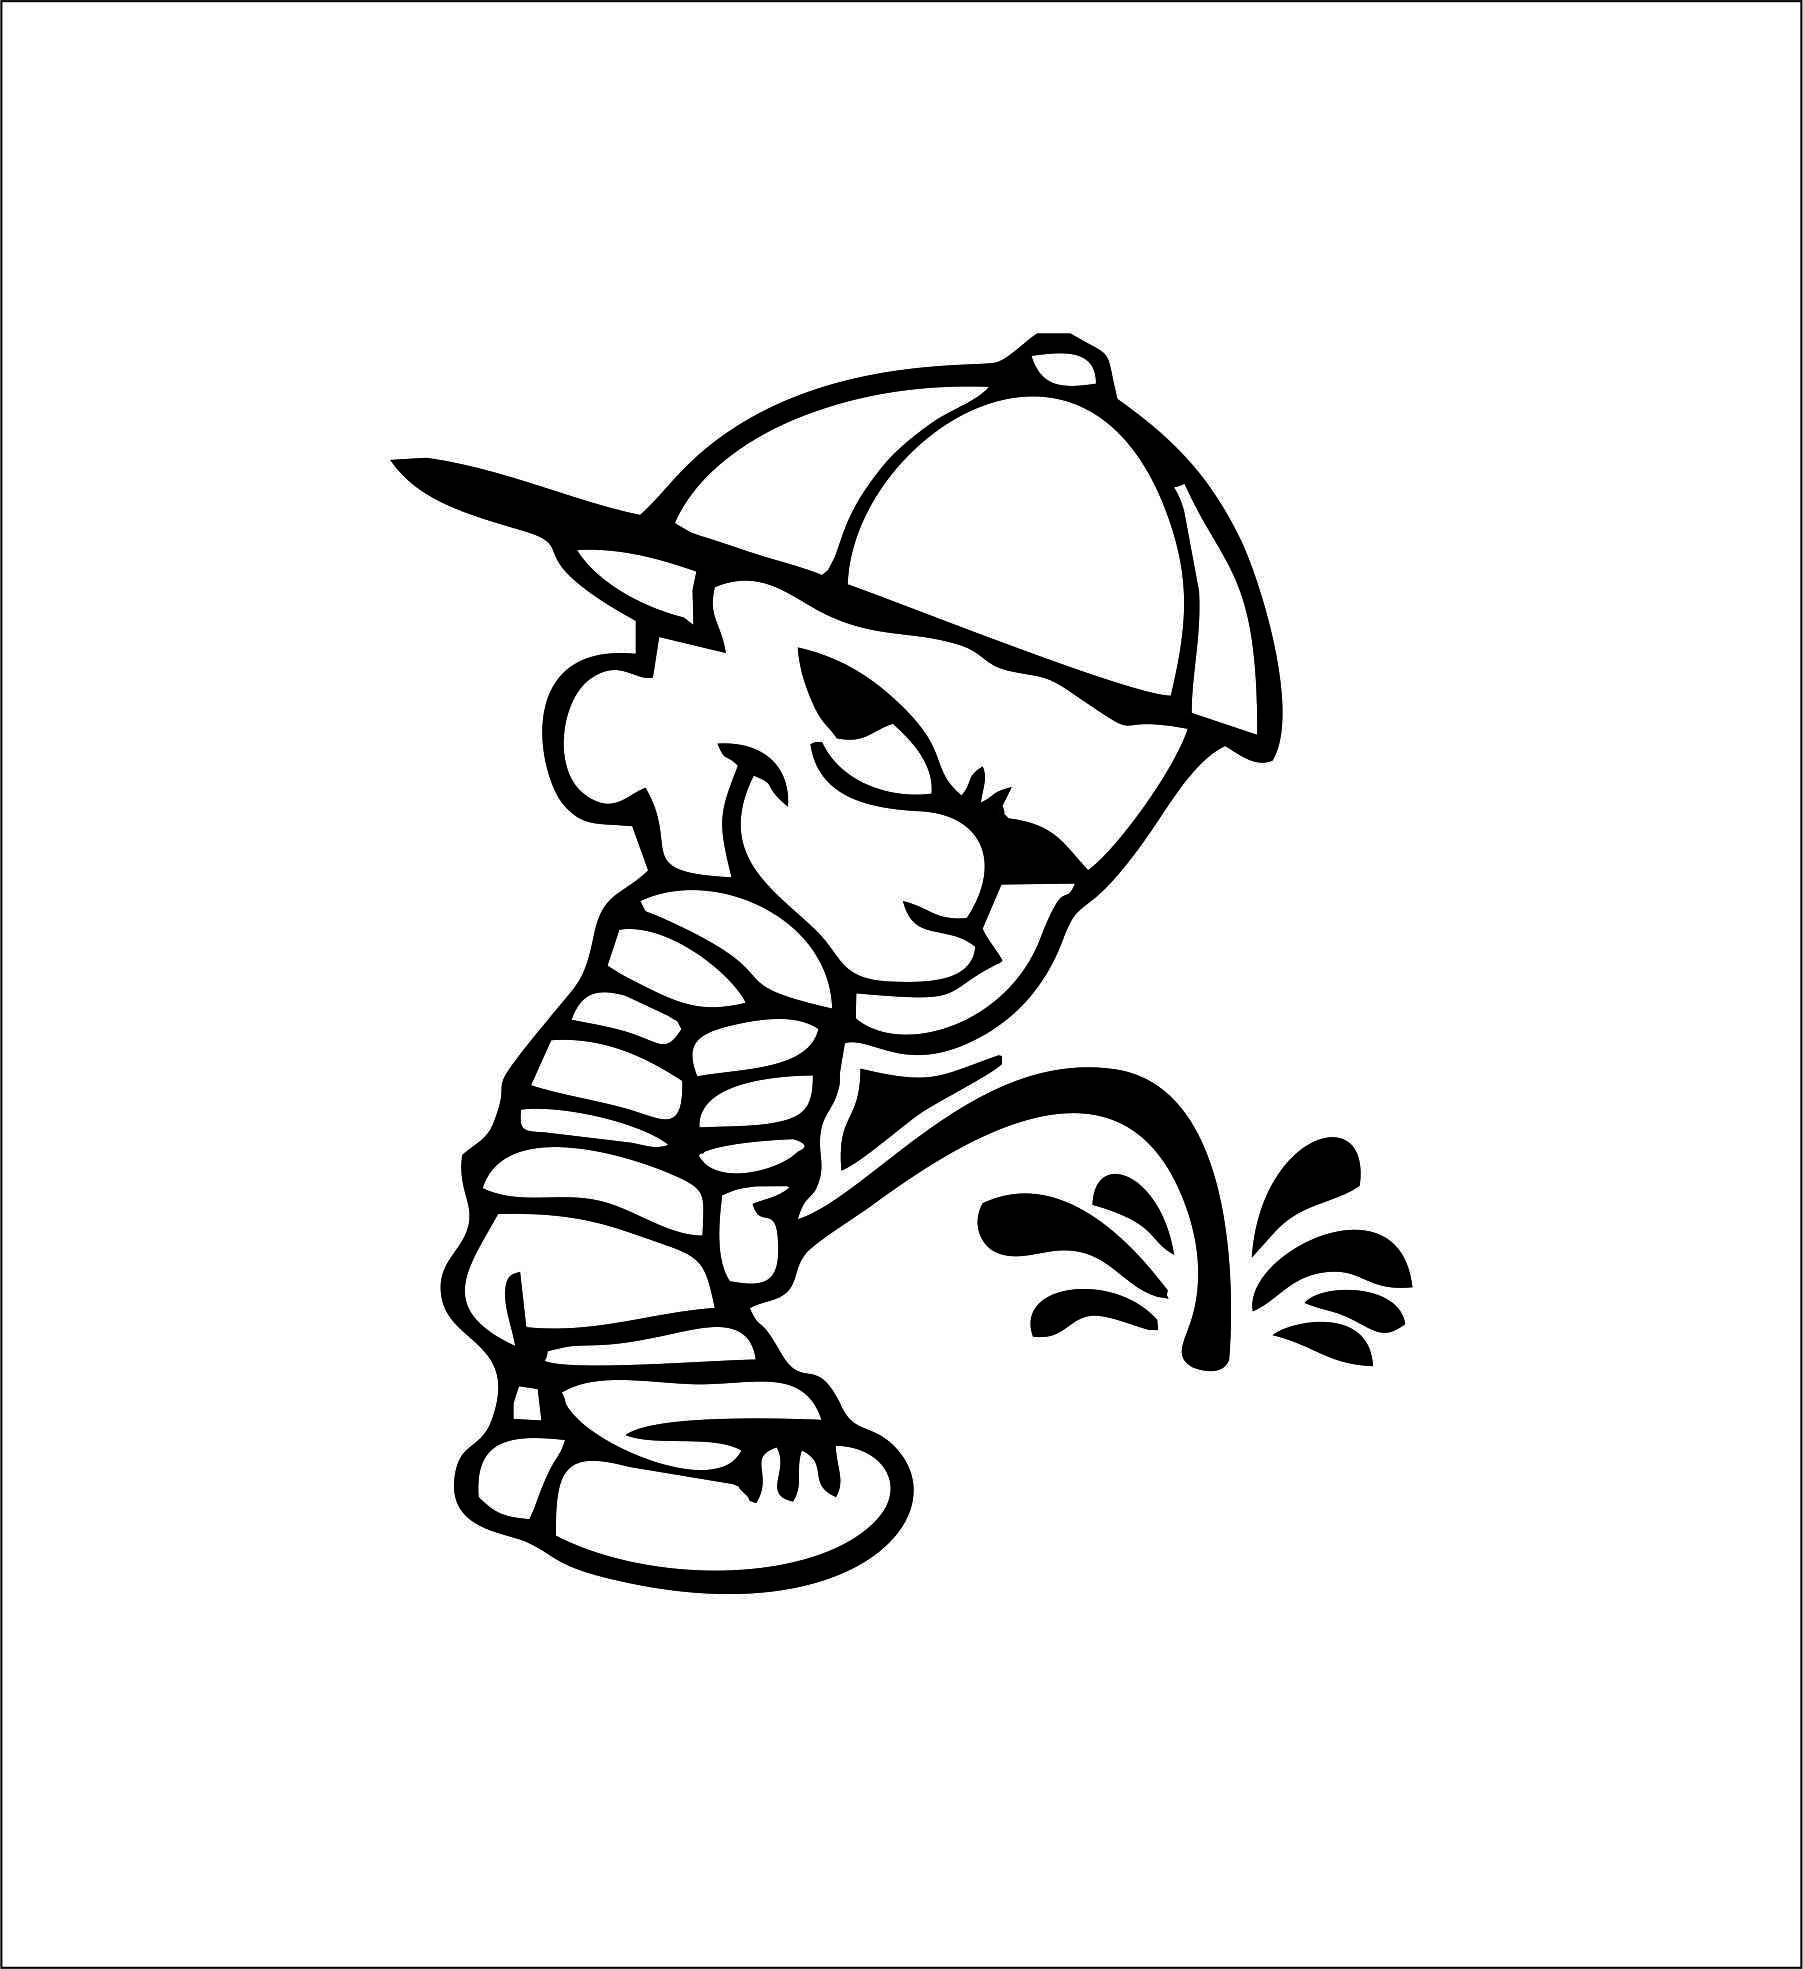 1x Boy Peeing Logo Decal Sticker 95mm X 117mm for